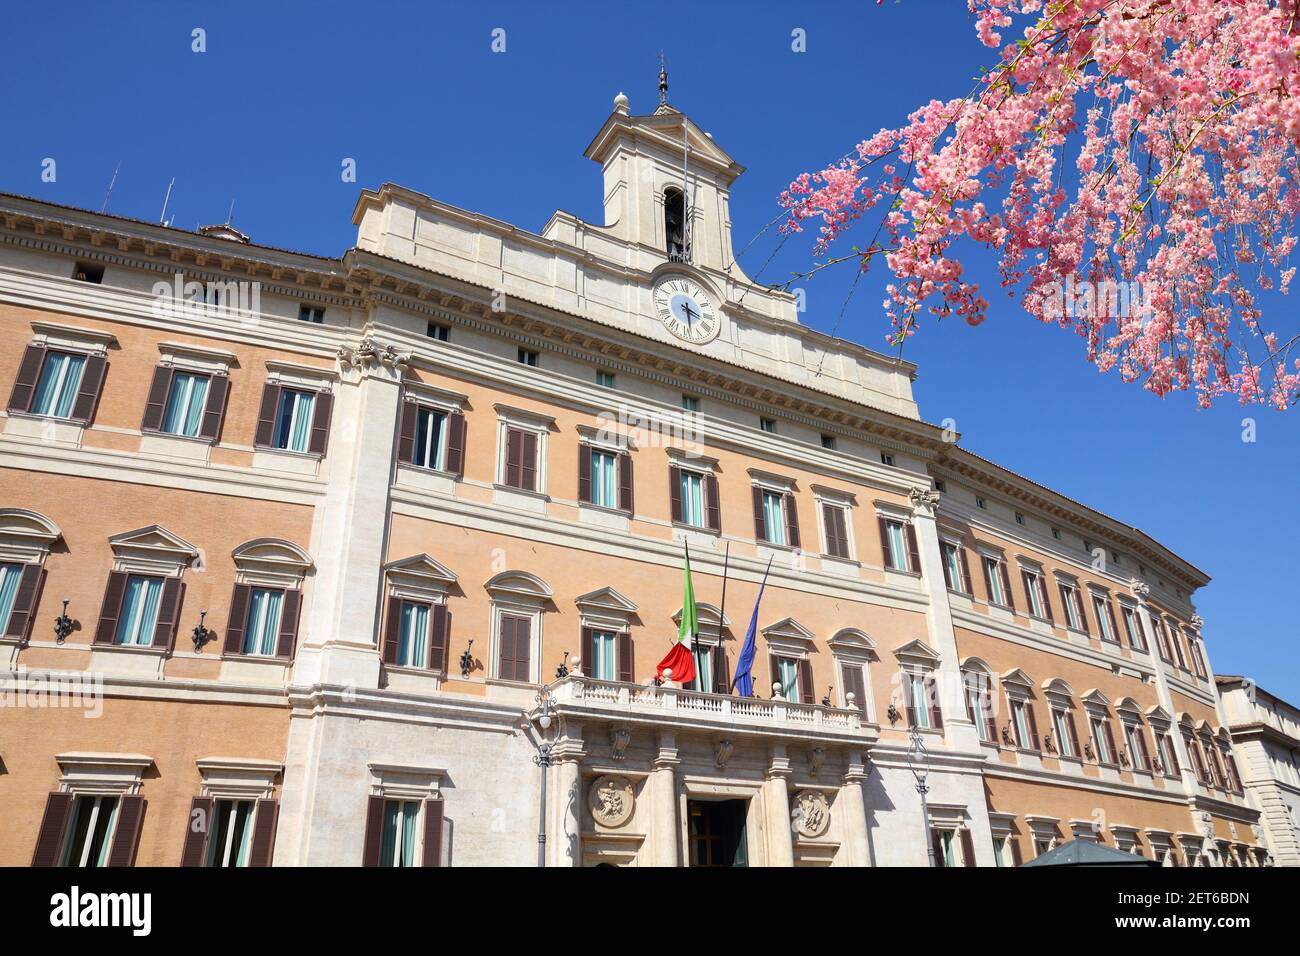 Spring in Rome, Italy. Rome landmark. Montecitorio palace Italian parliament. Cherry blossoms. Stock Photo